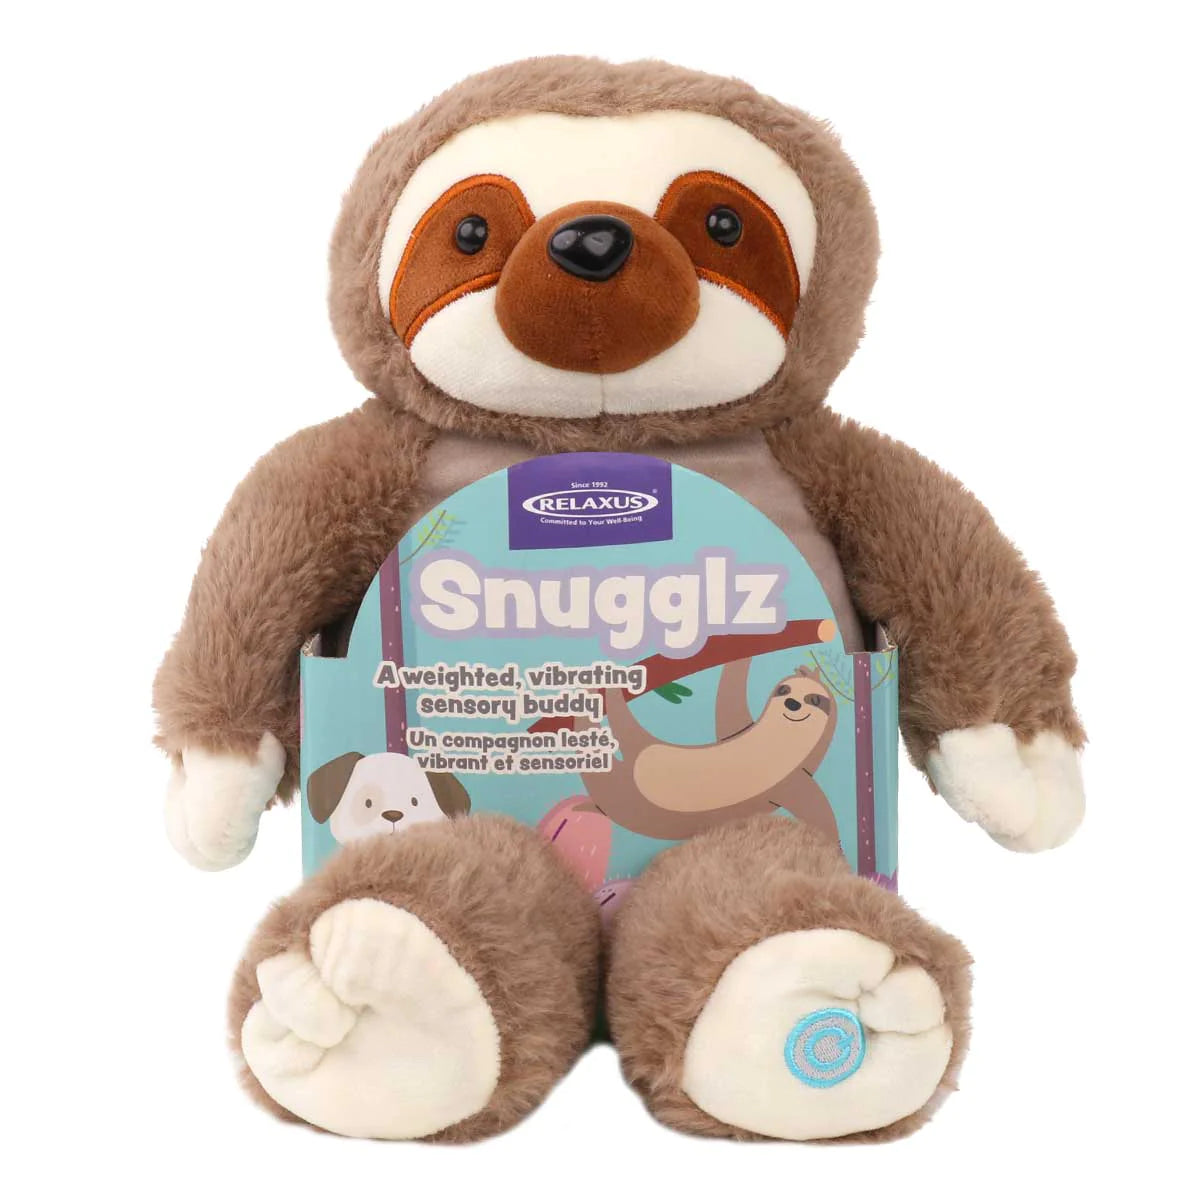 Snugglz Huggable Sloth